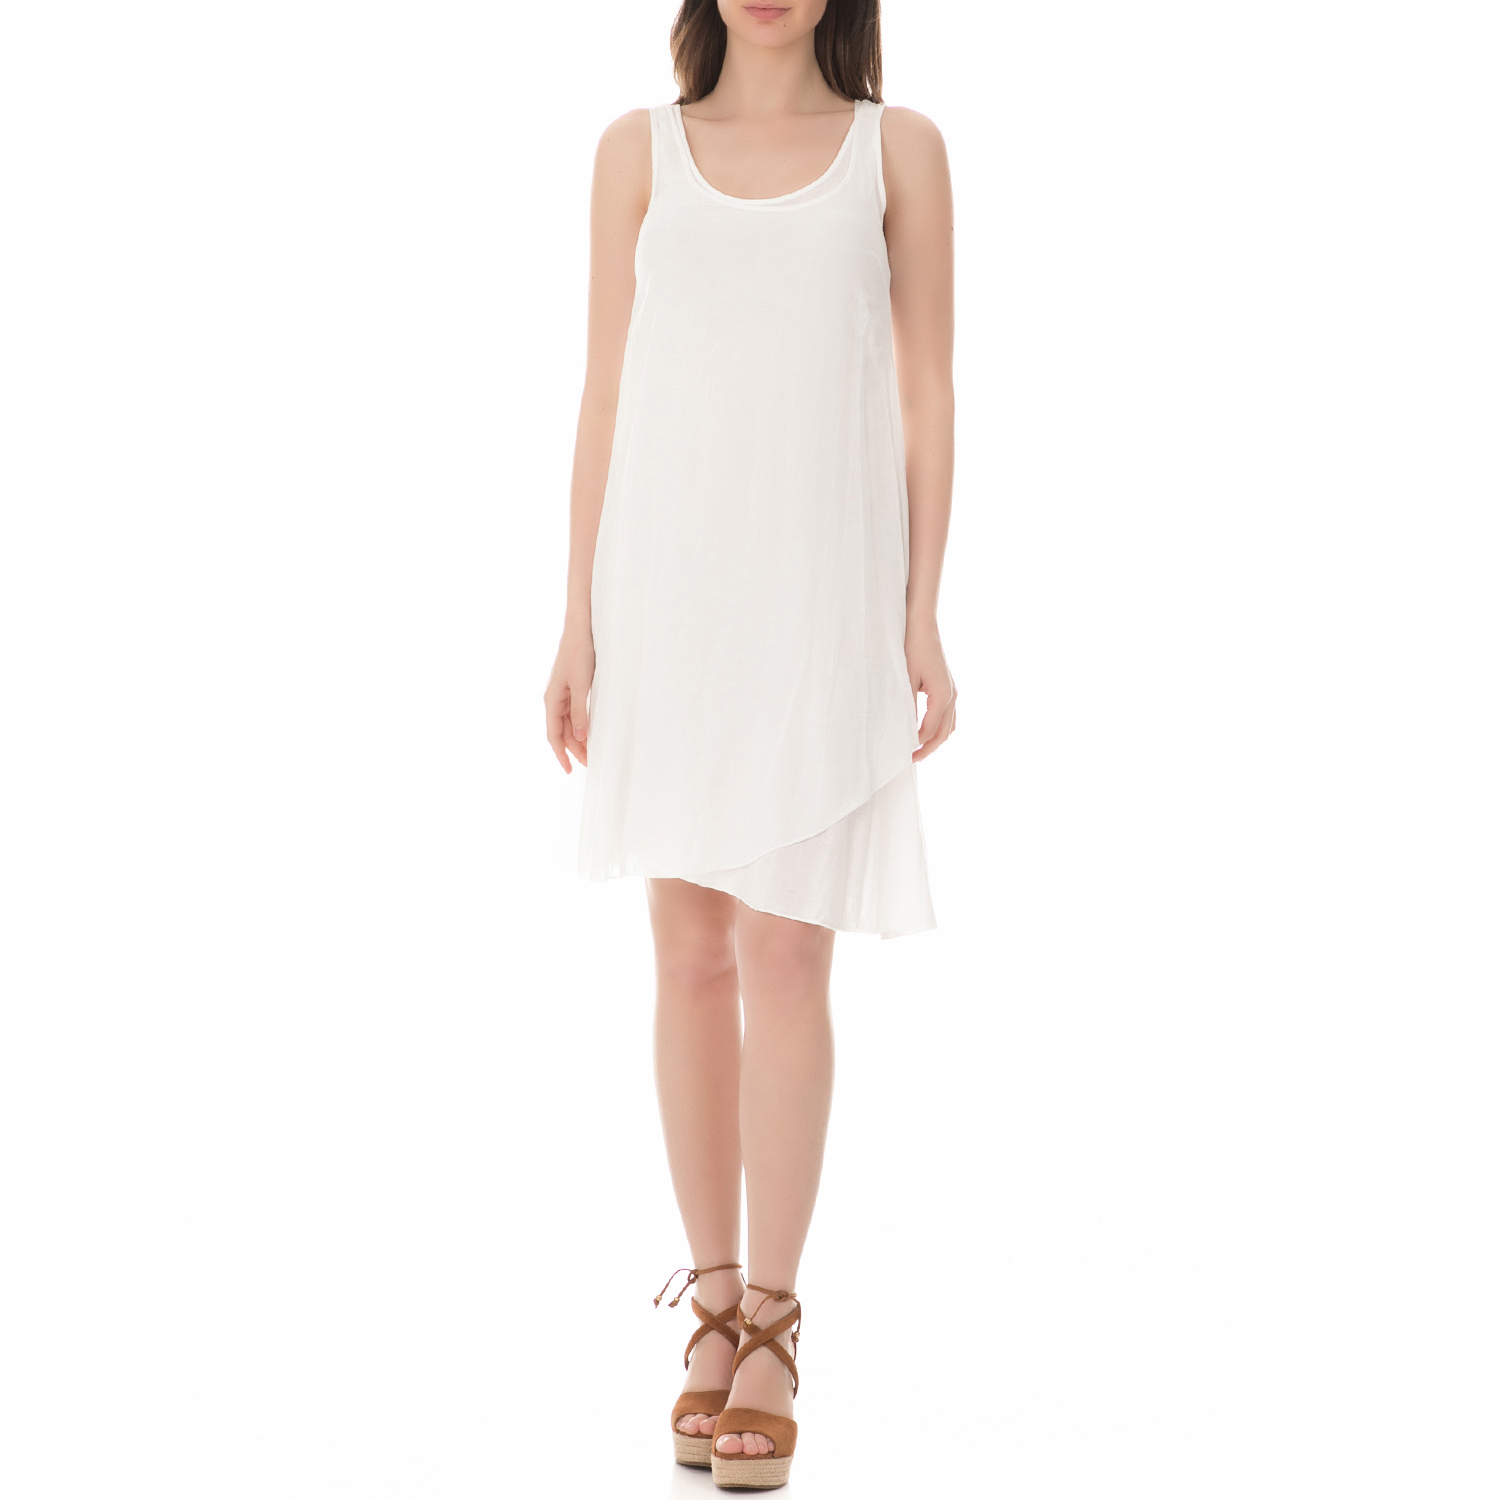 BRAEZ – Γυναικείο μίνι φόρεμα BRAEZ λευκό